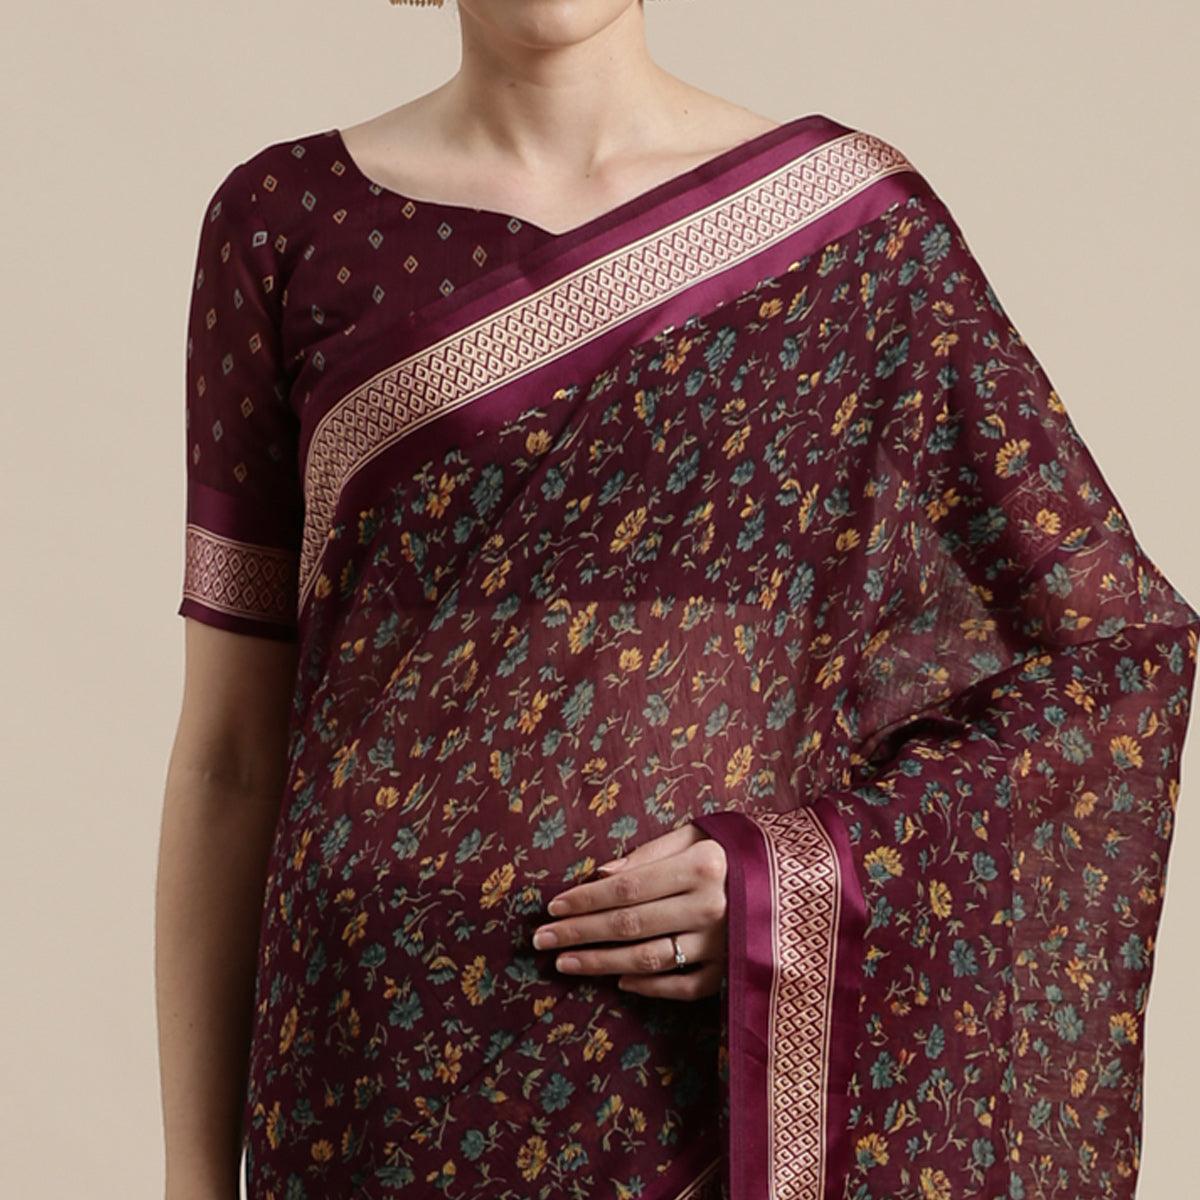 Amazing Wine Colored Casual Wear Floral Printed Cotton Silk Saree - Peachmode